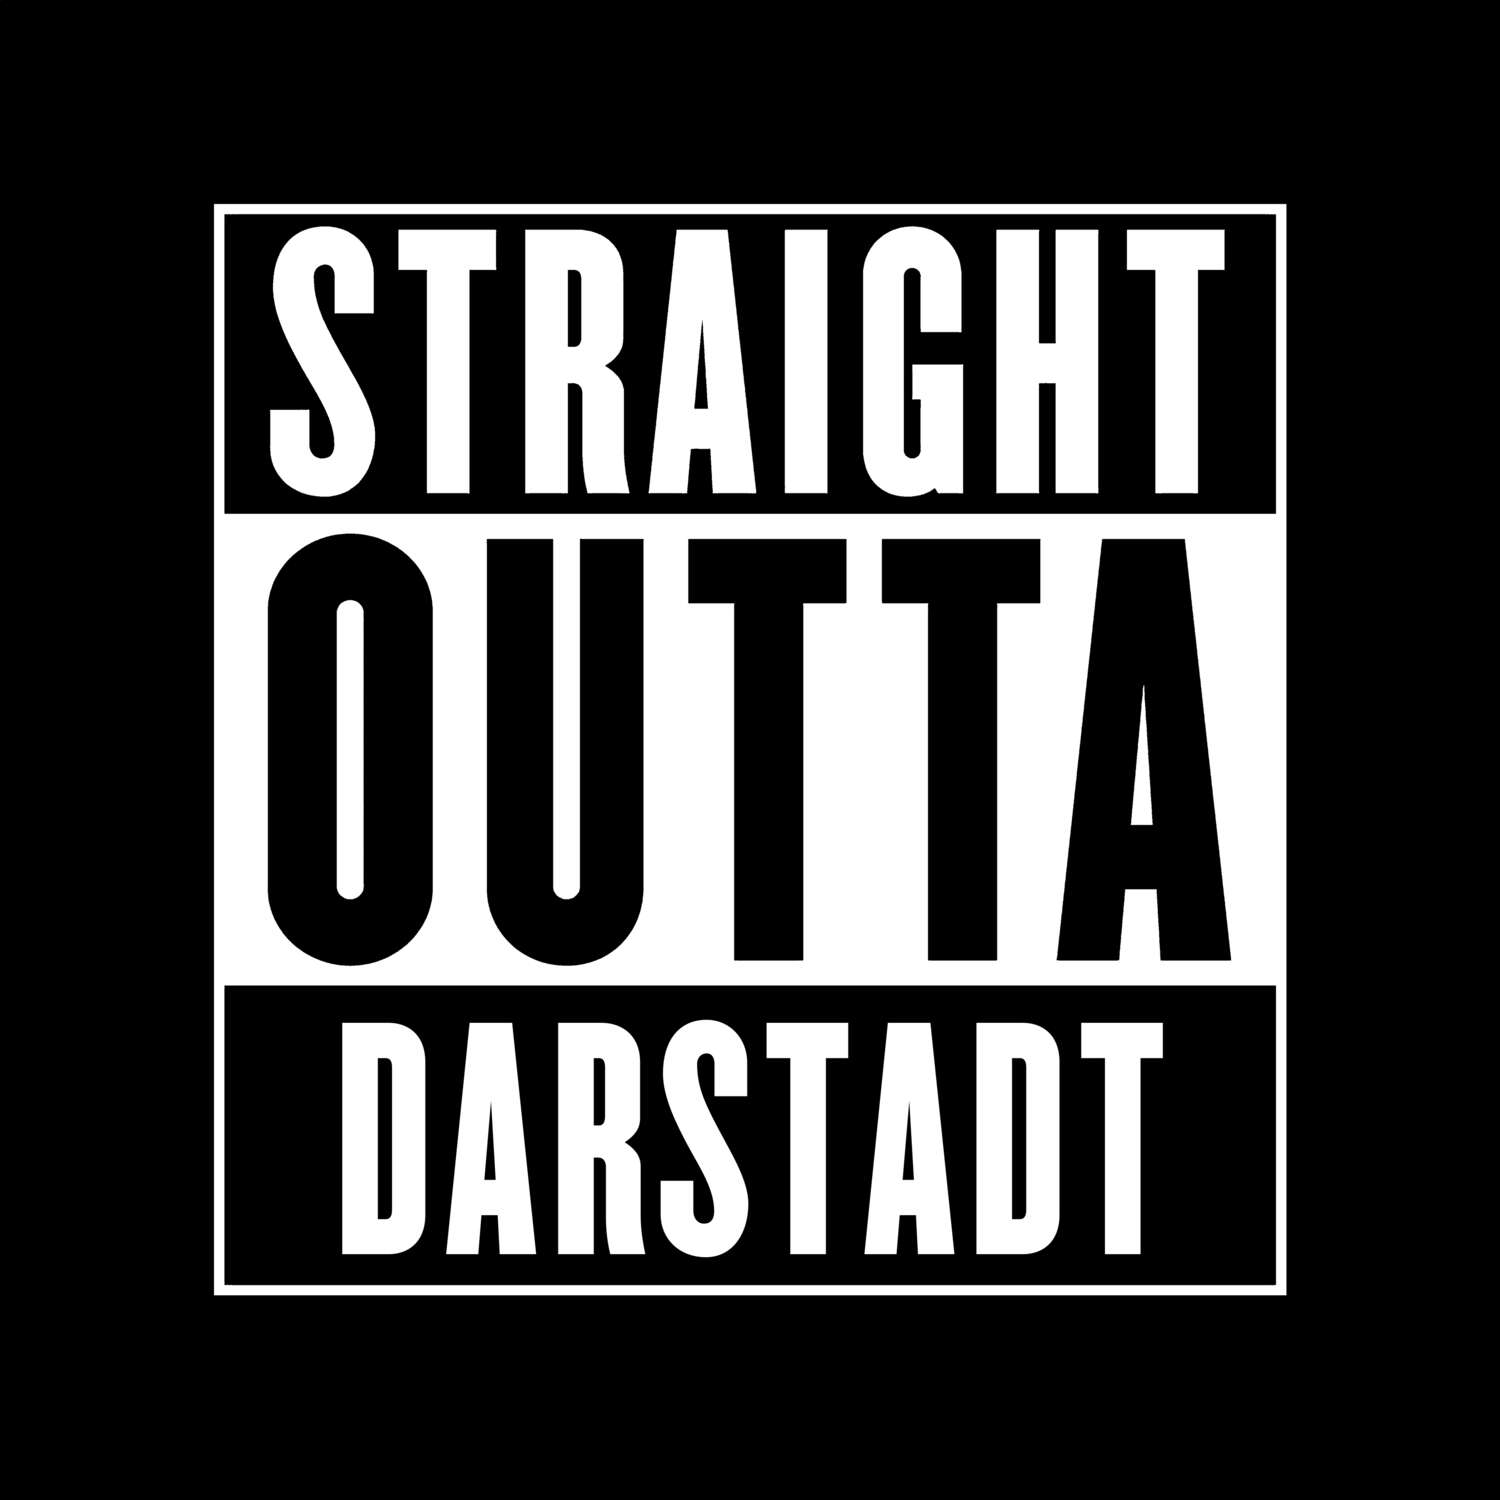 Darstadt T-Shirt »Straight Outta«